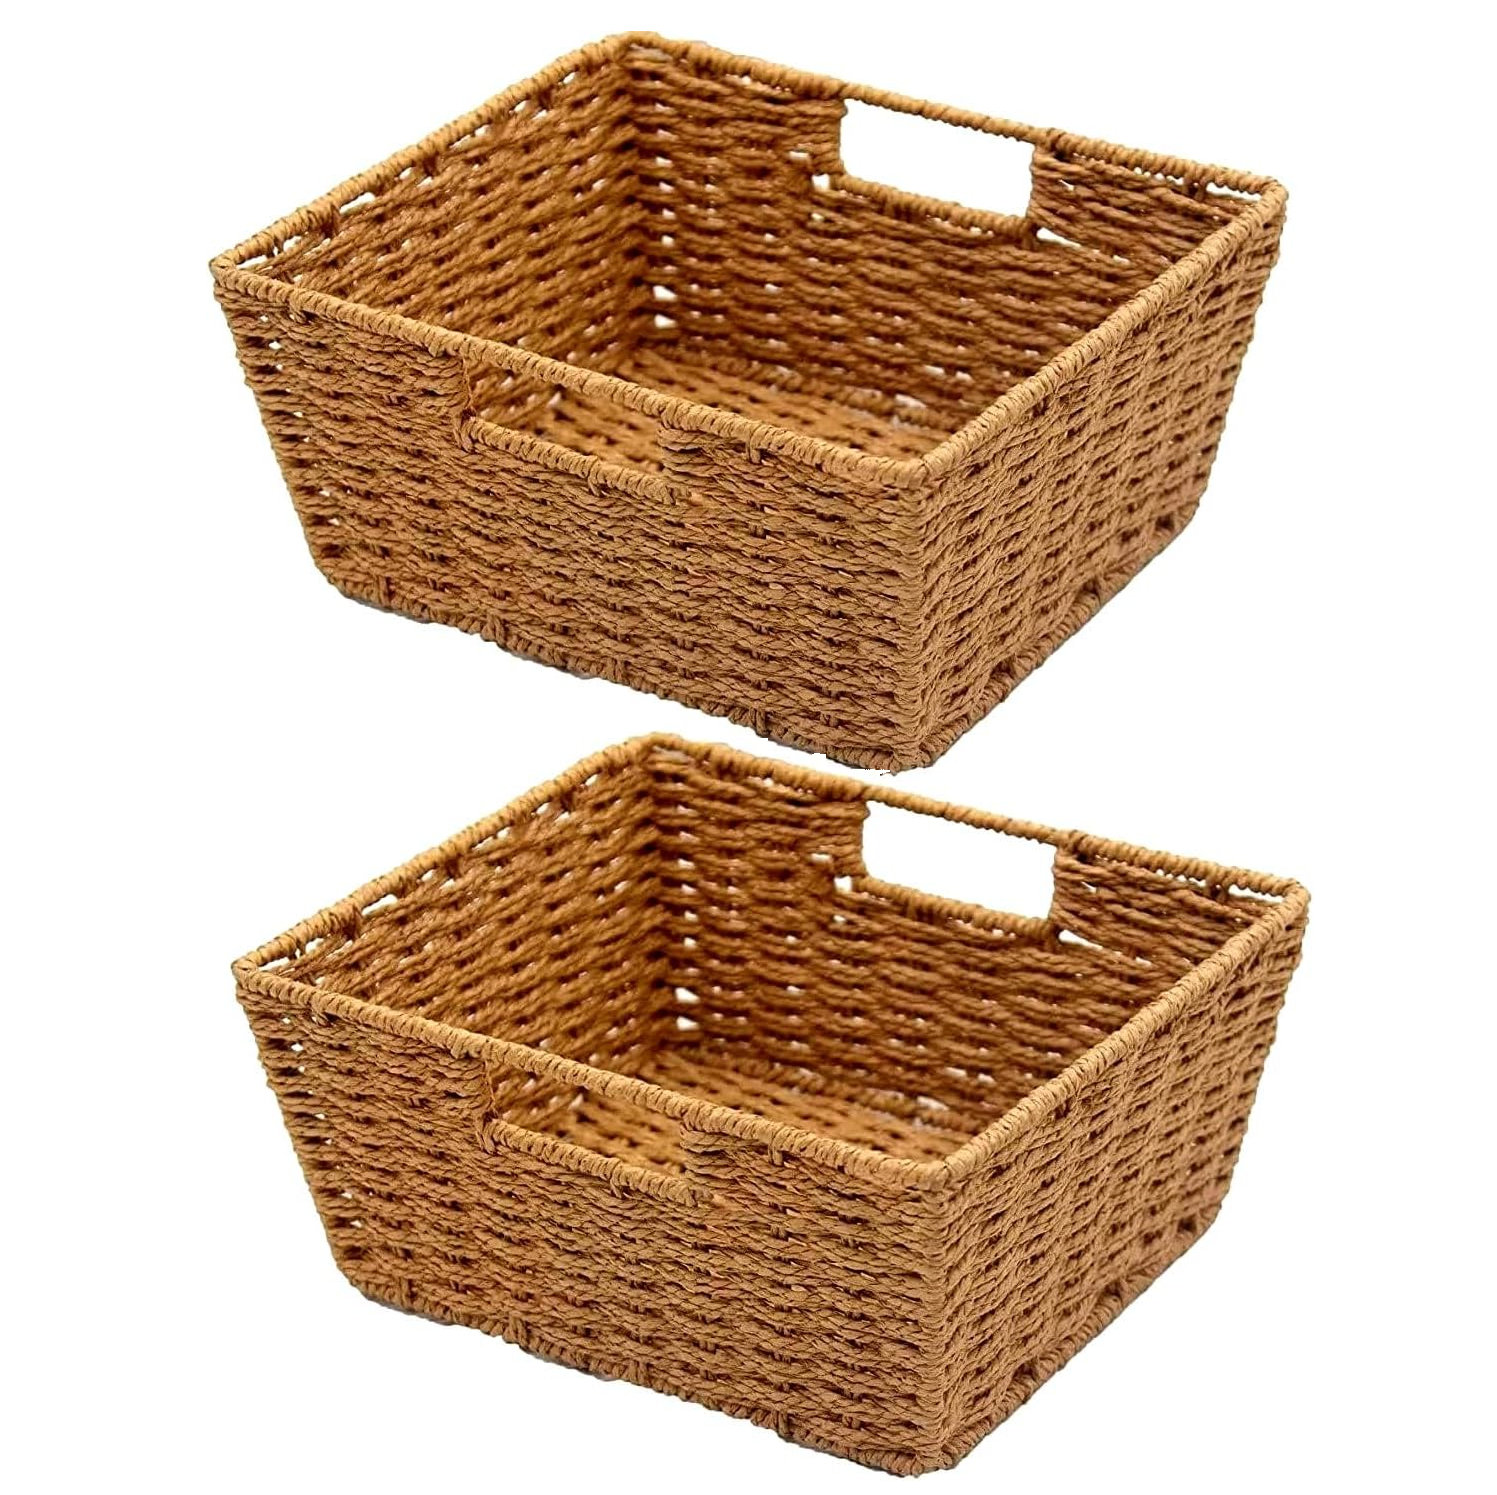 Extra Large Rectangular Storage Basket, Large Storage Baskets for Clot